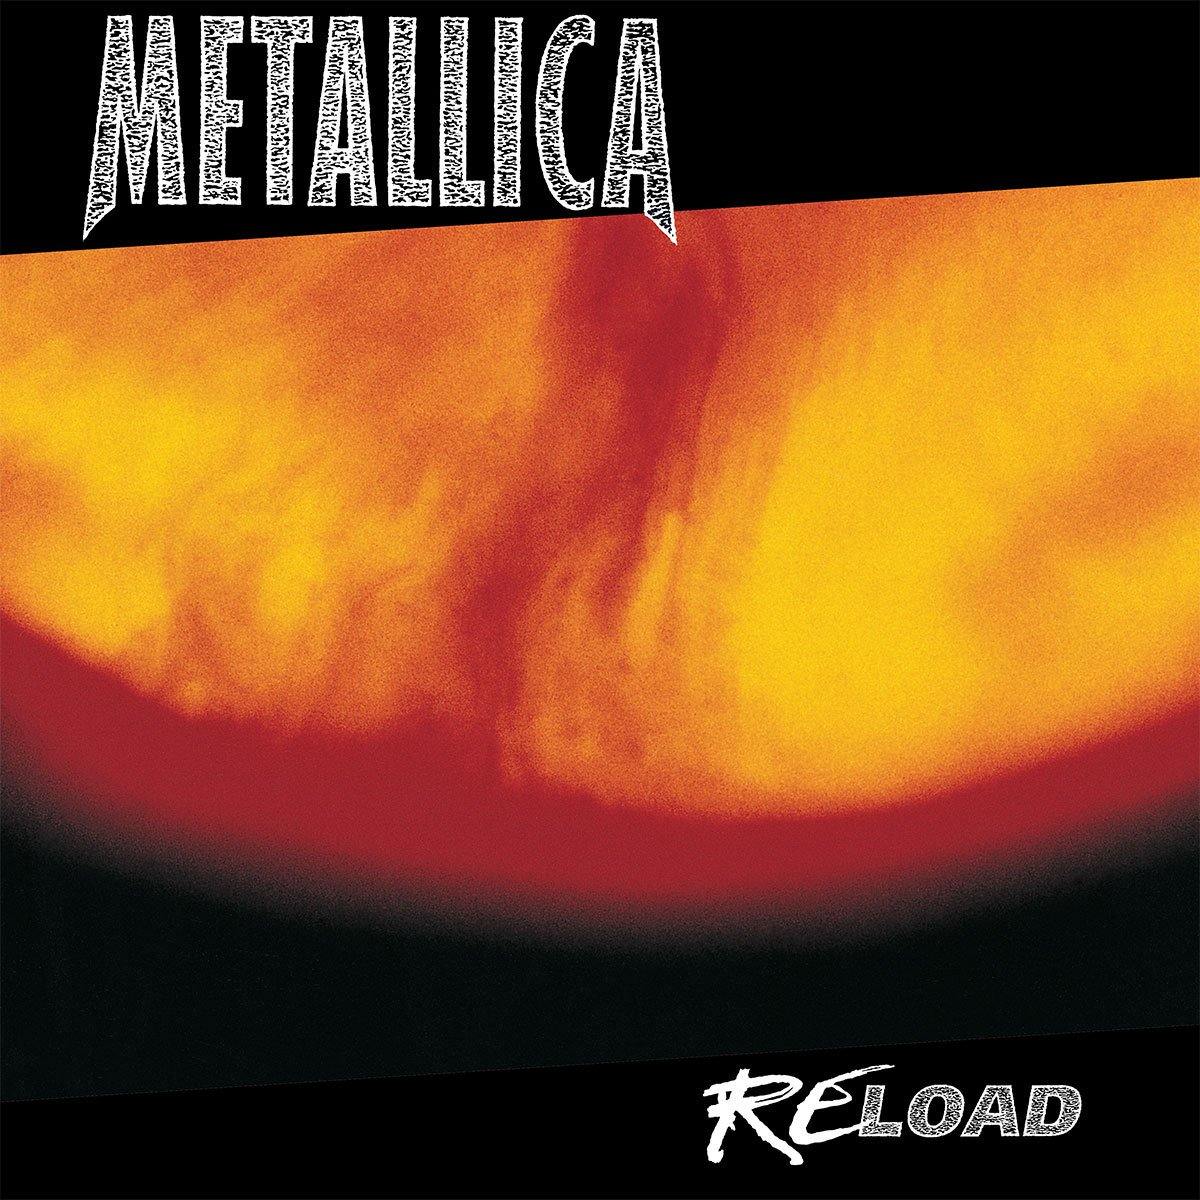 Buy – Metallica "Reload" CD – Band & Music Merch – Cold Cuts Merch